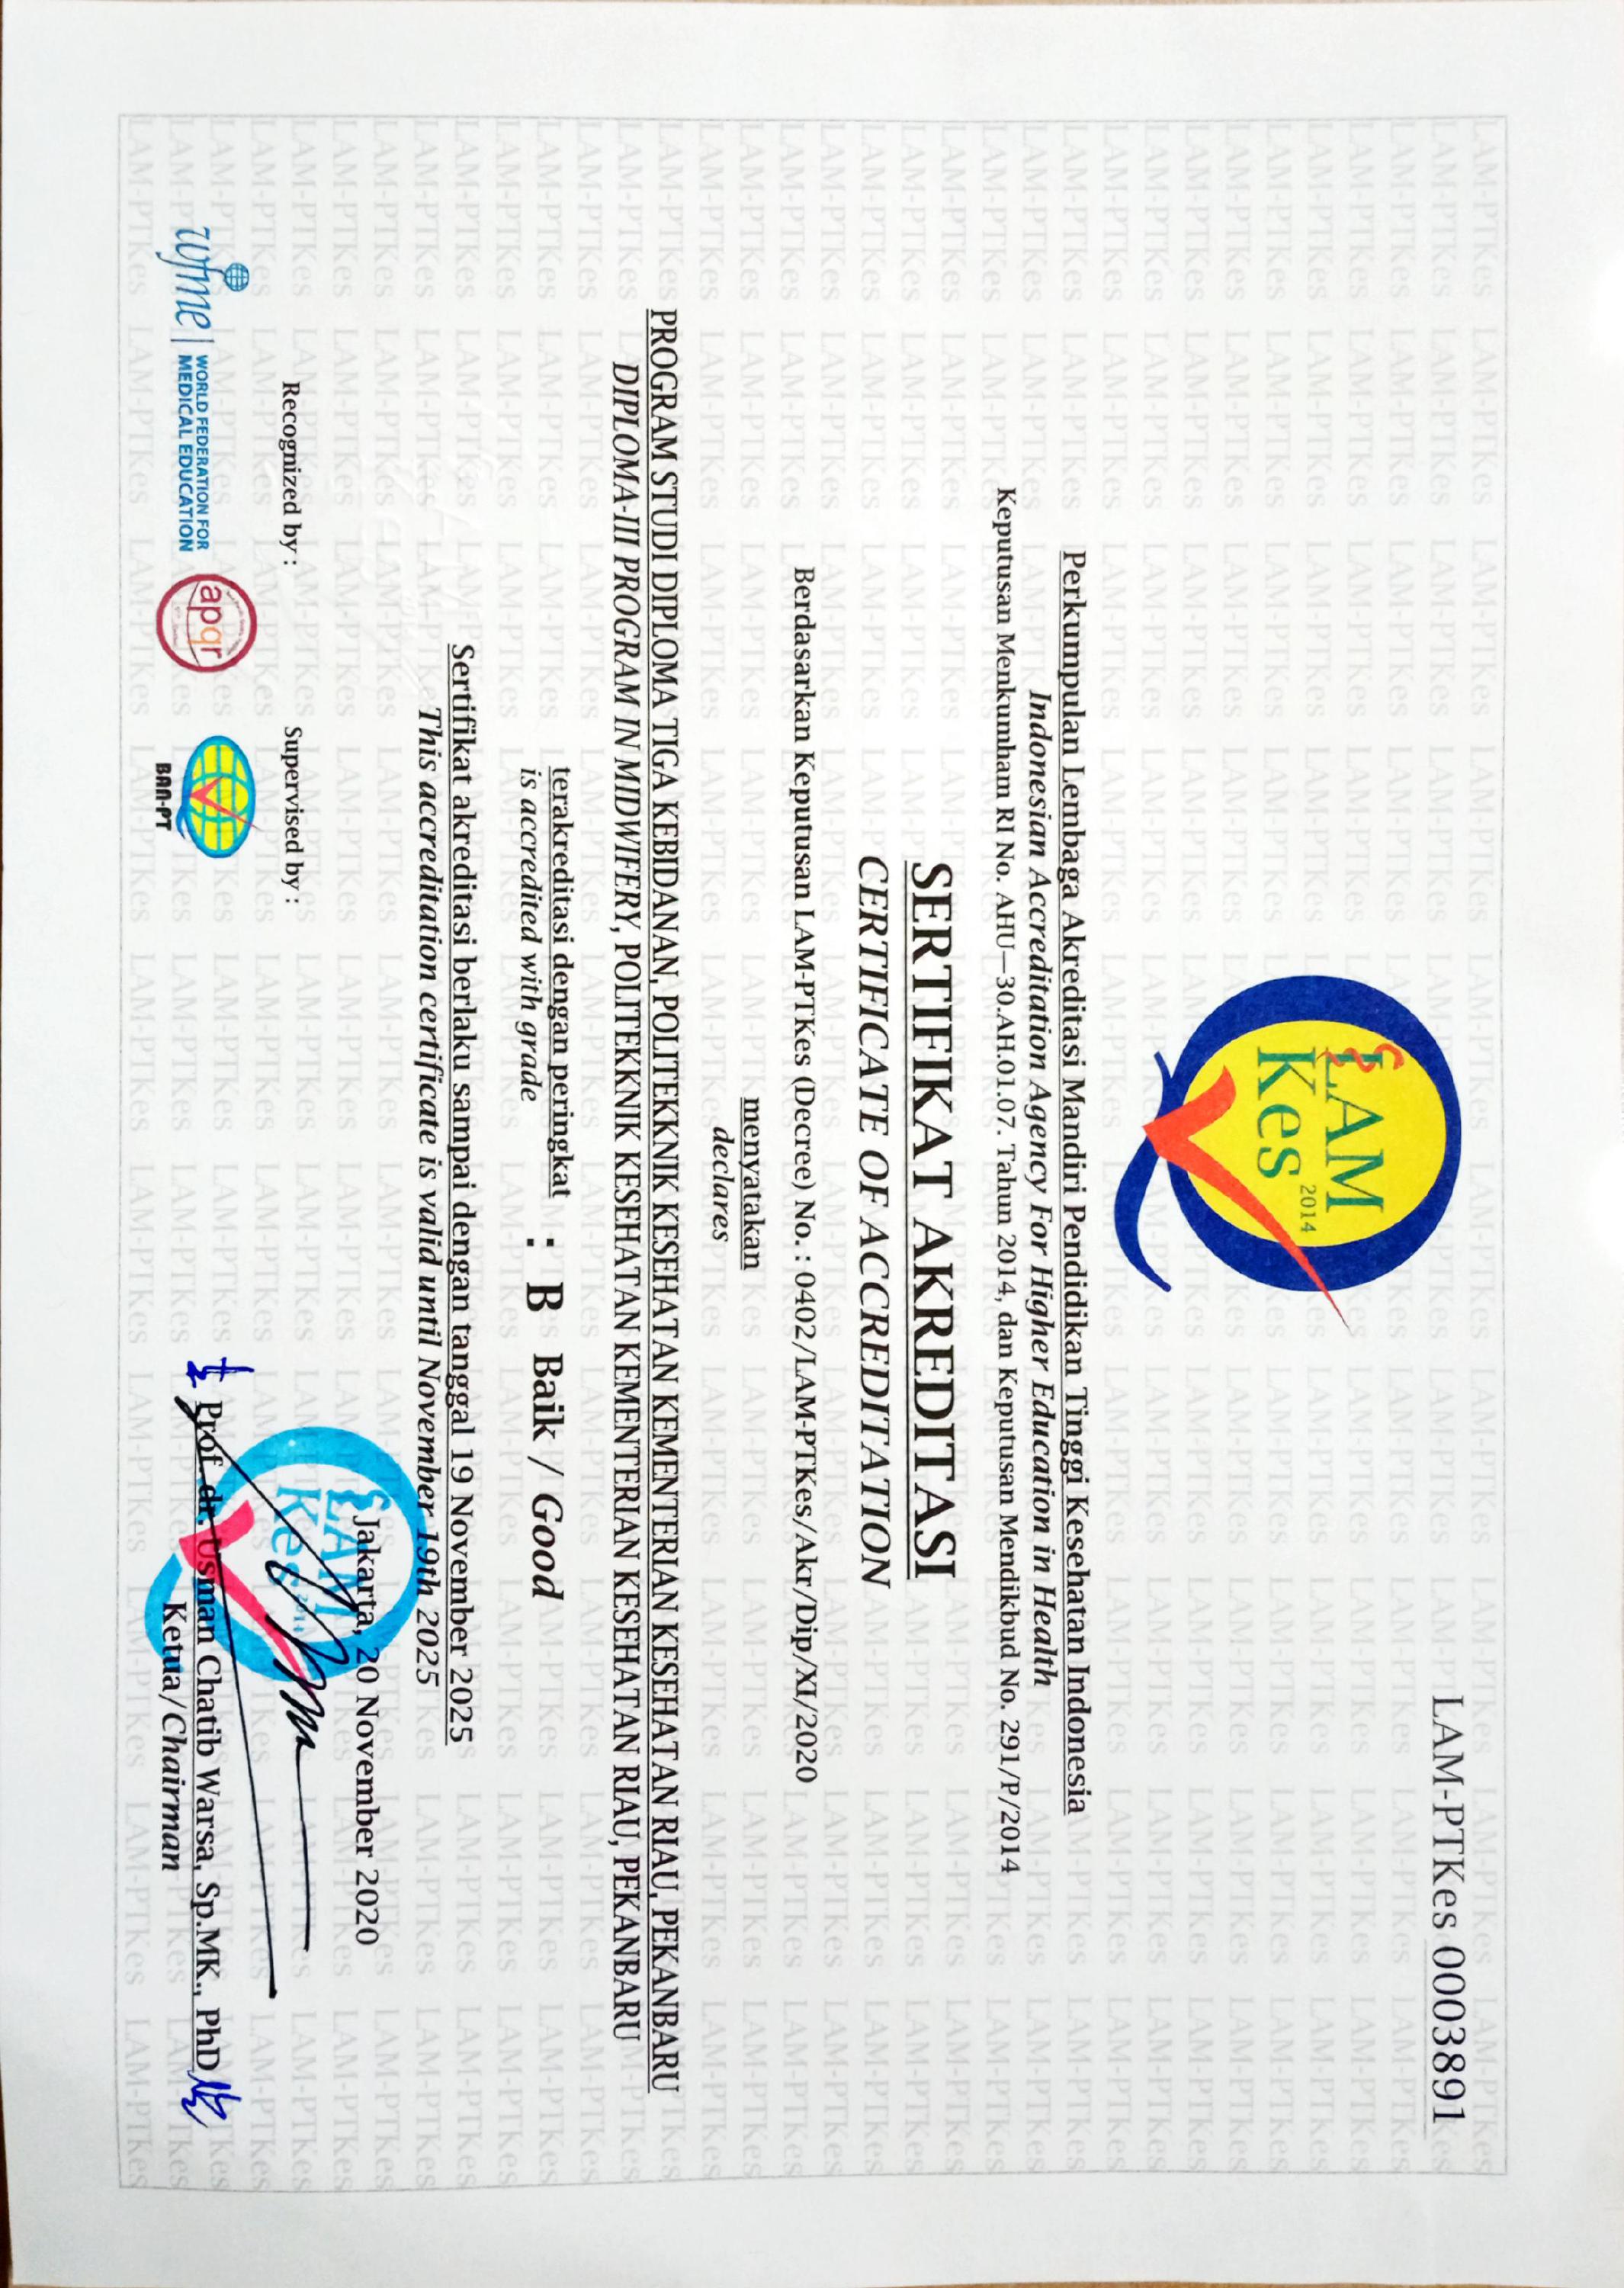 Download sertifikat akreditasi ban pt